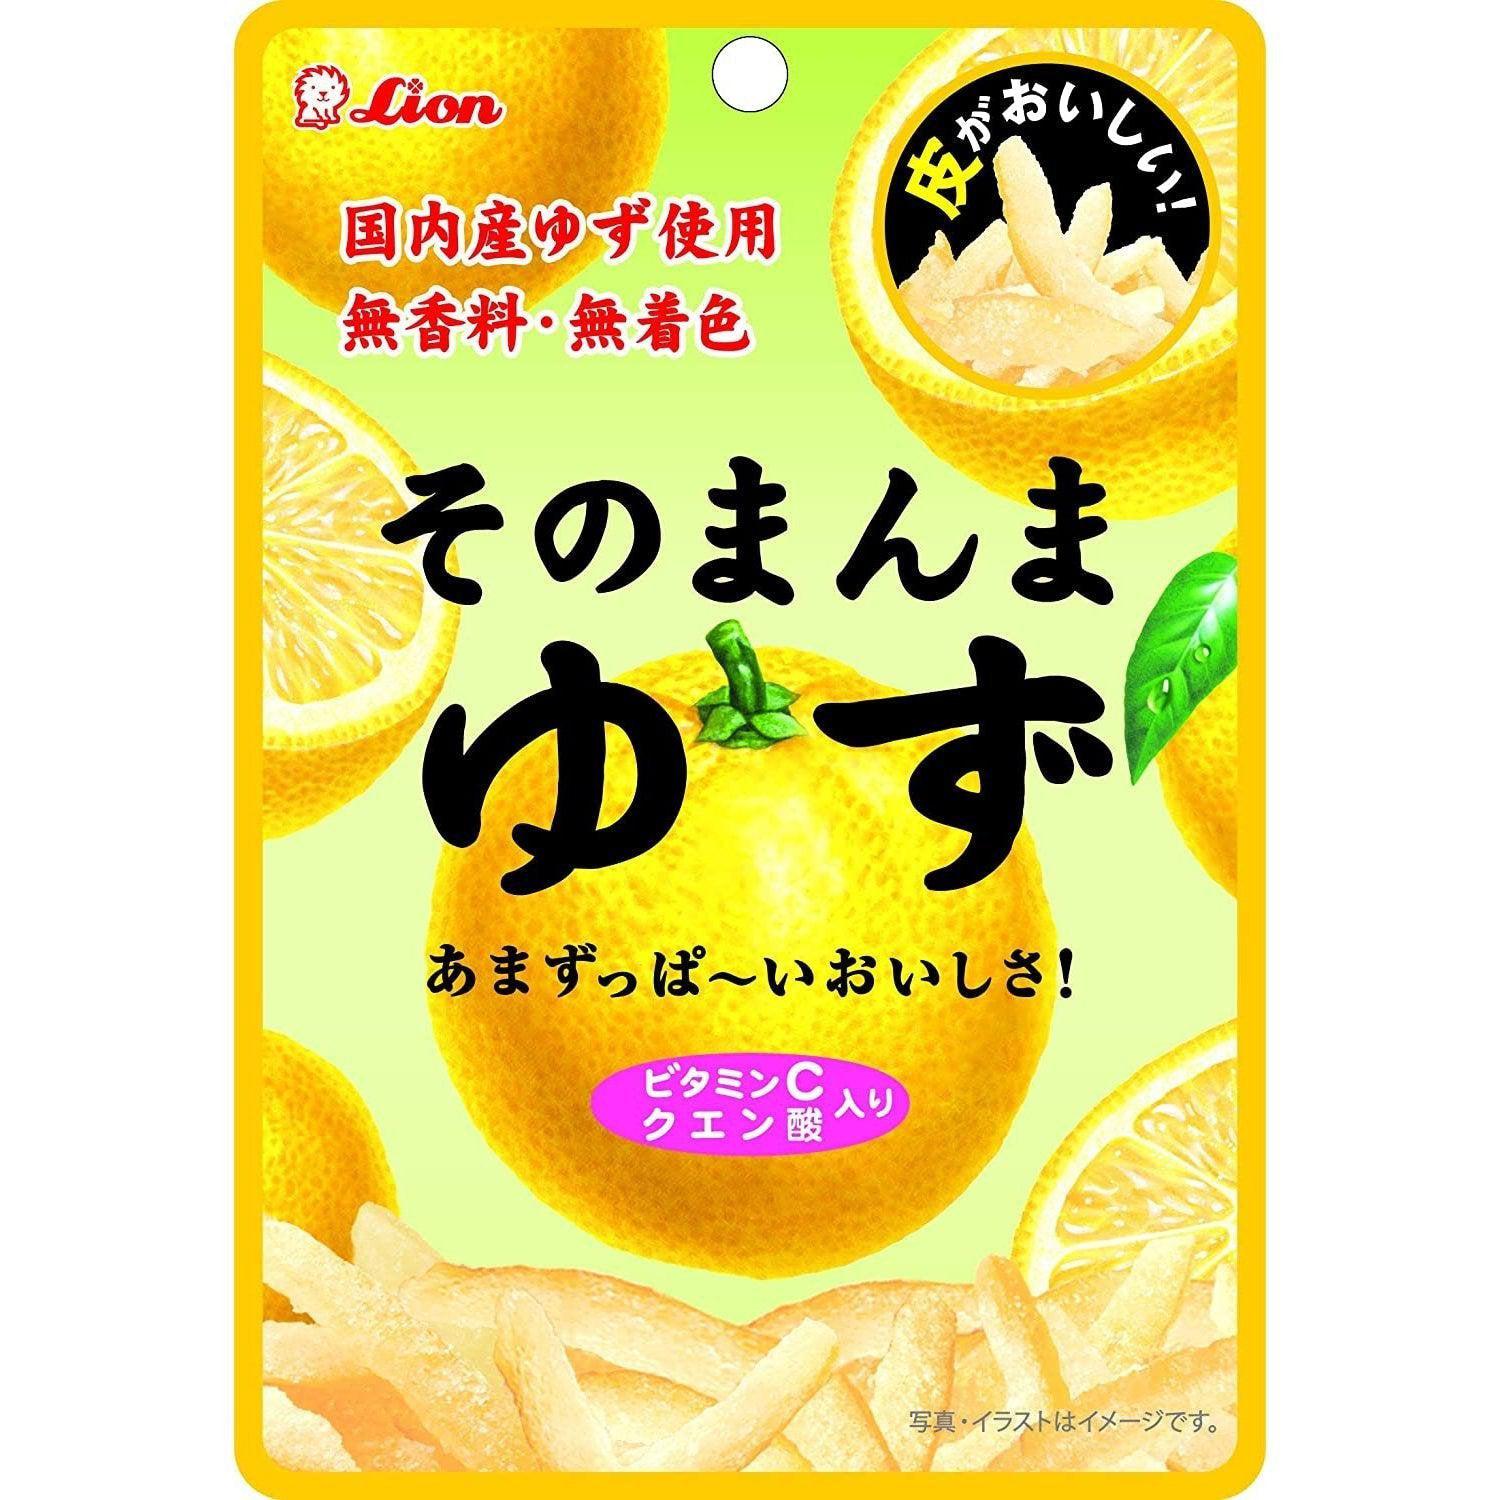 Lion Sonomanma Yuzu Candied Yuzu Citrus Peel Snack 23g (Pack of 6)